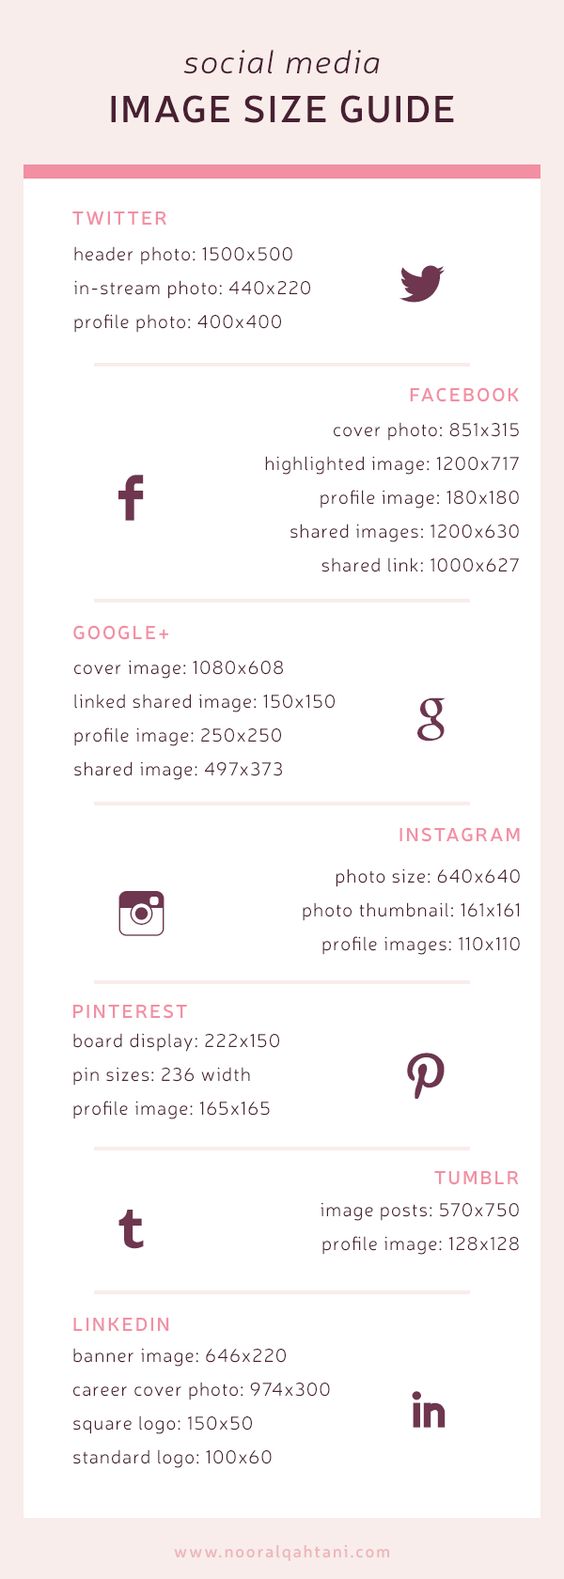 Social Media Image Size Guide